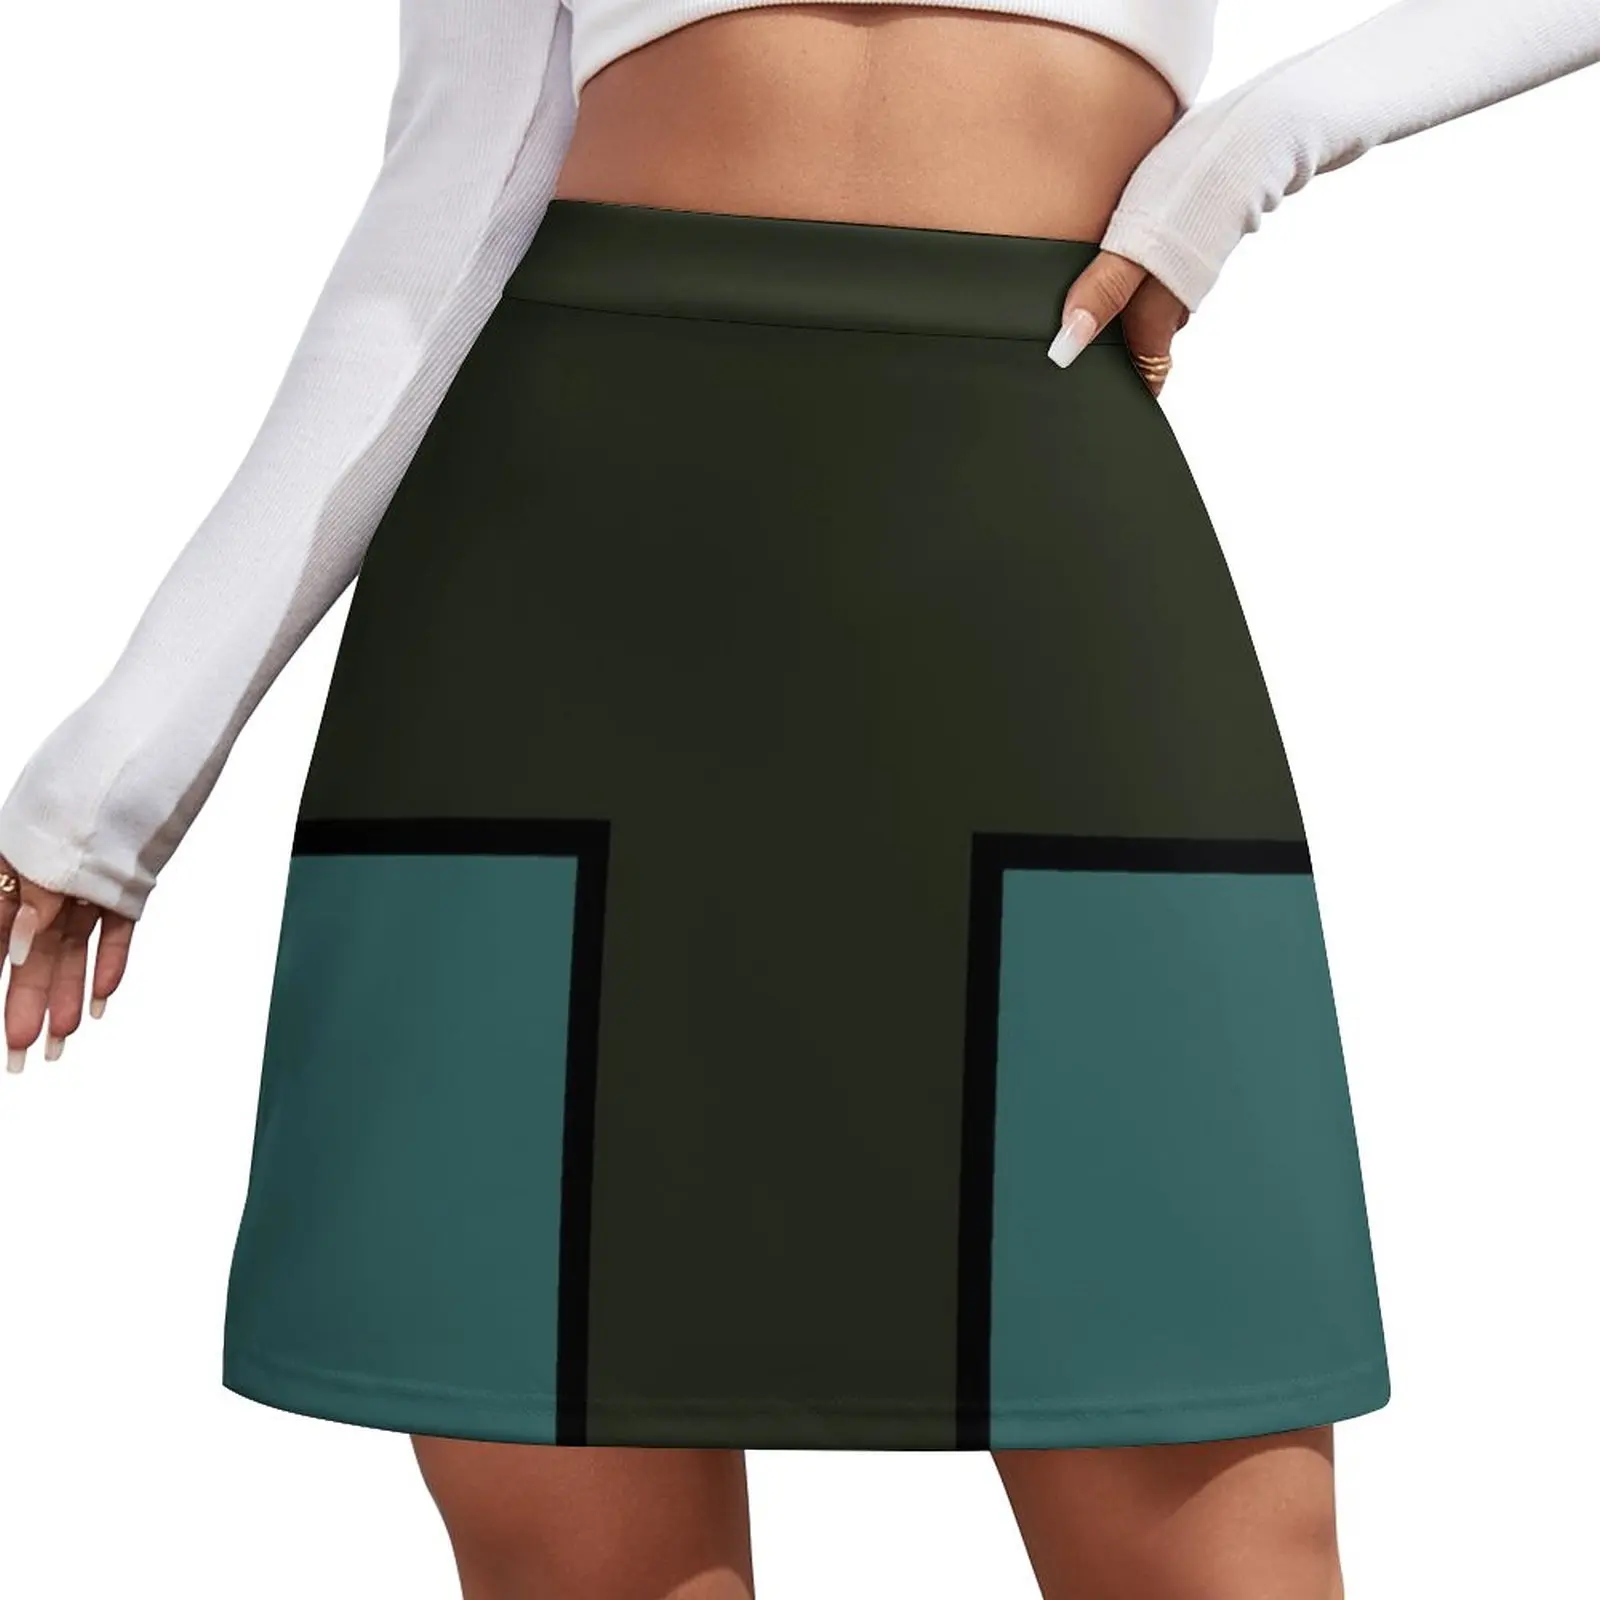 Gwen's Skirt - Total Drama Mini Skirt skirts for womens fashion Summer women's clothing